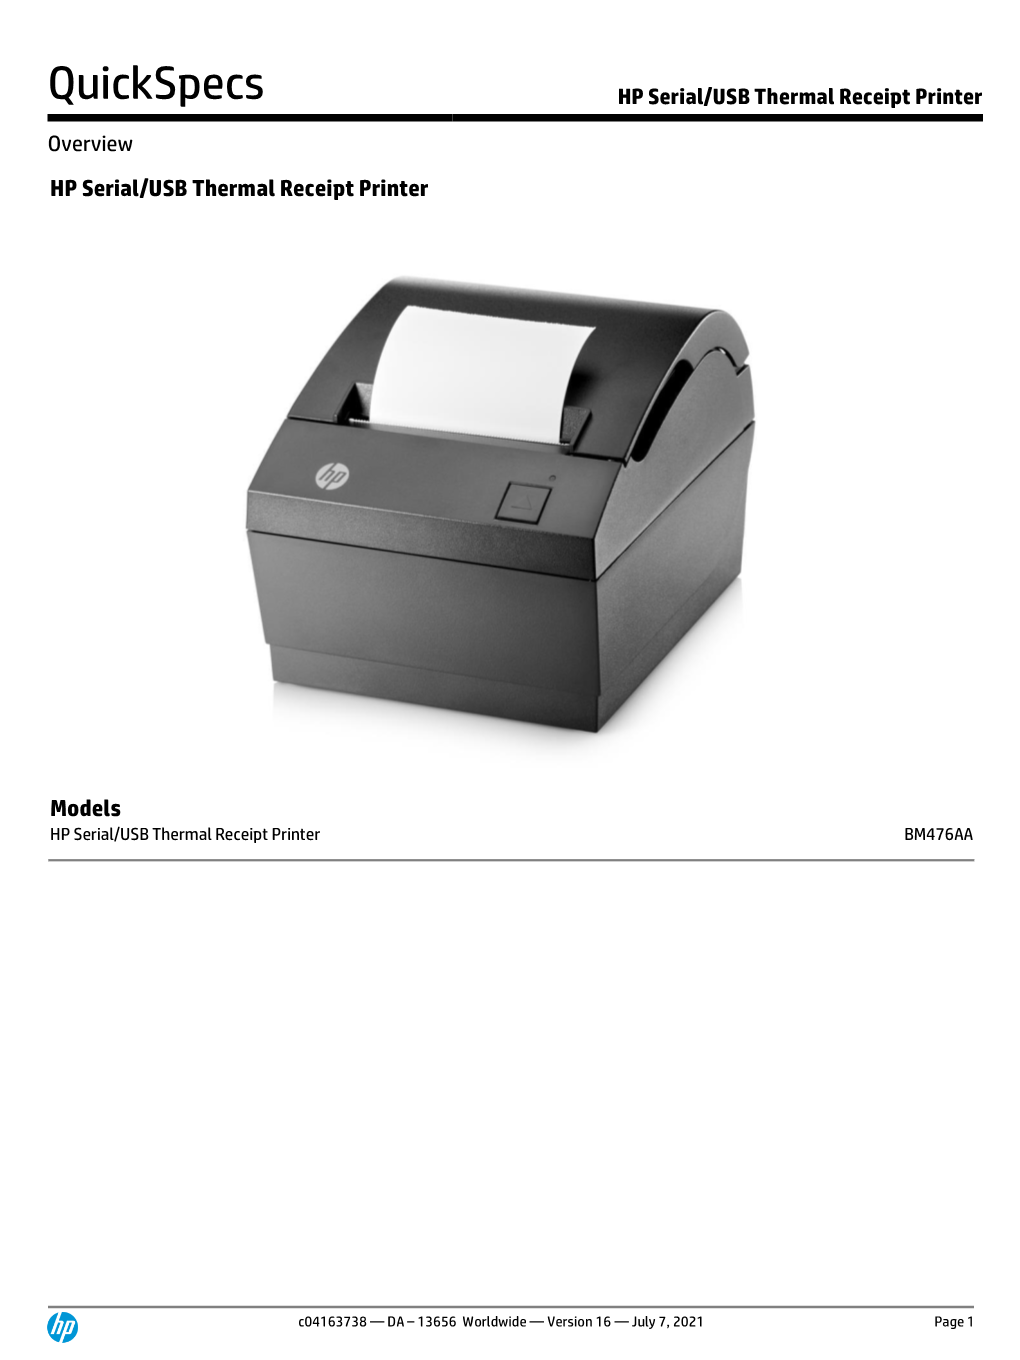 HP Serial-USB Thermal Receipt Printer